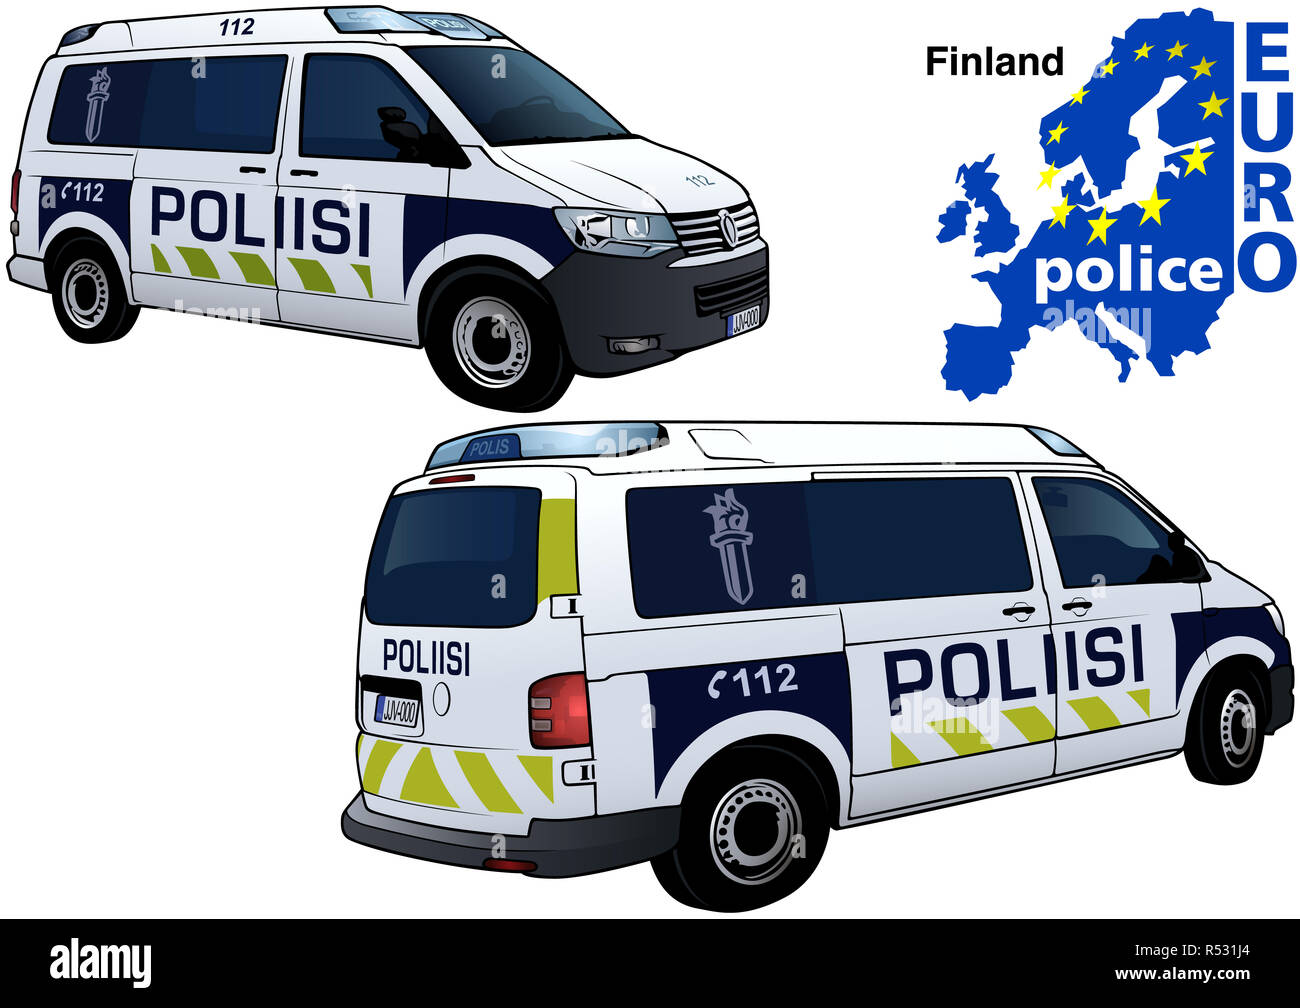 Finland Police Car Stock Photo